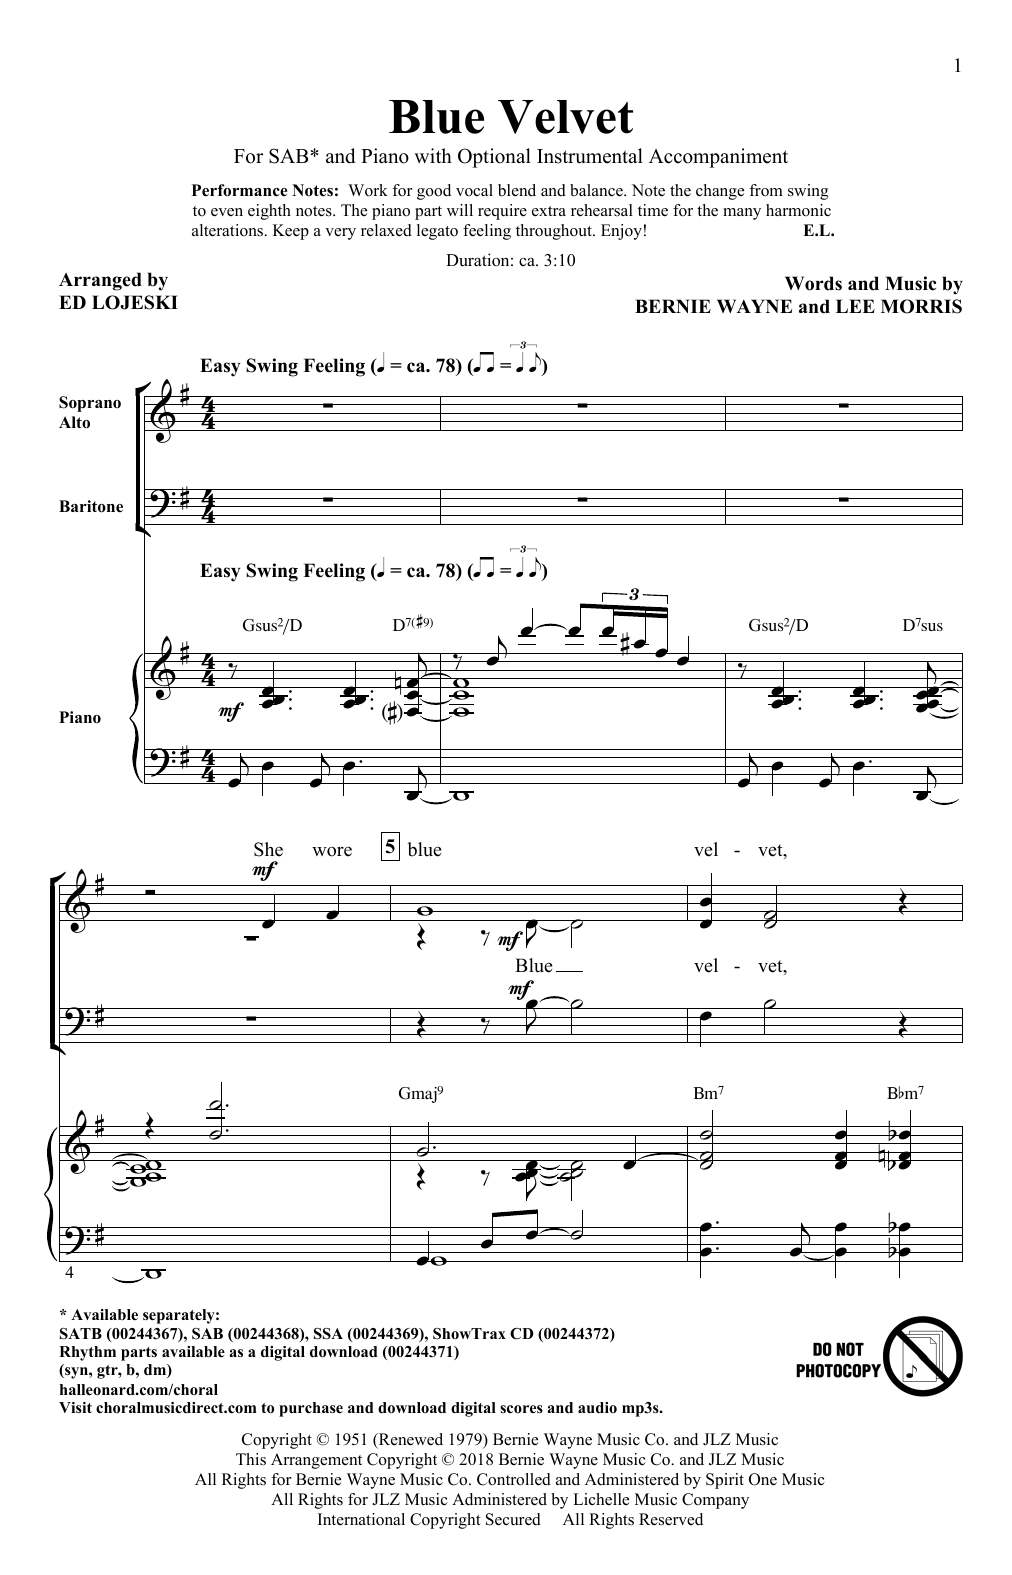 Ed Lojeski Blue Velvet sheet music notes and chords arranged for SATB Choir